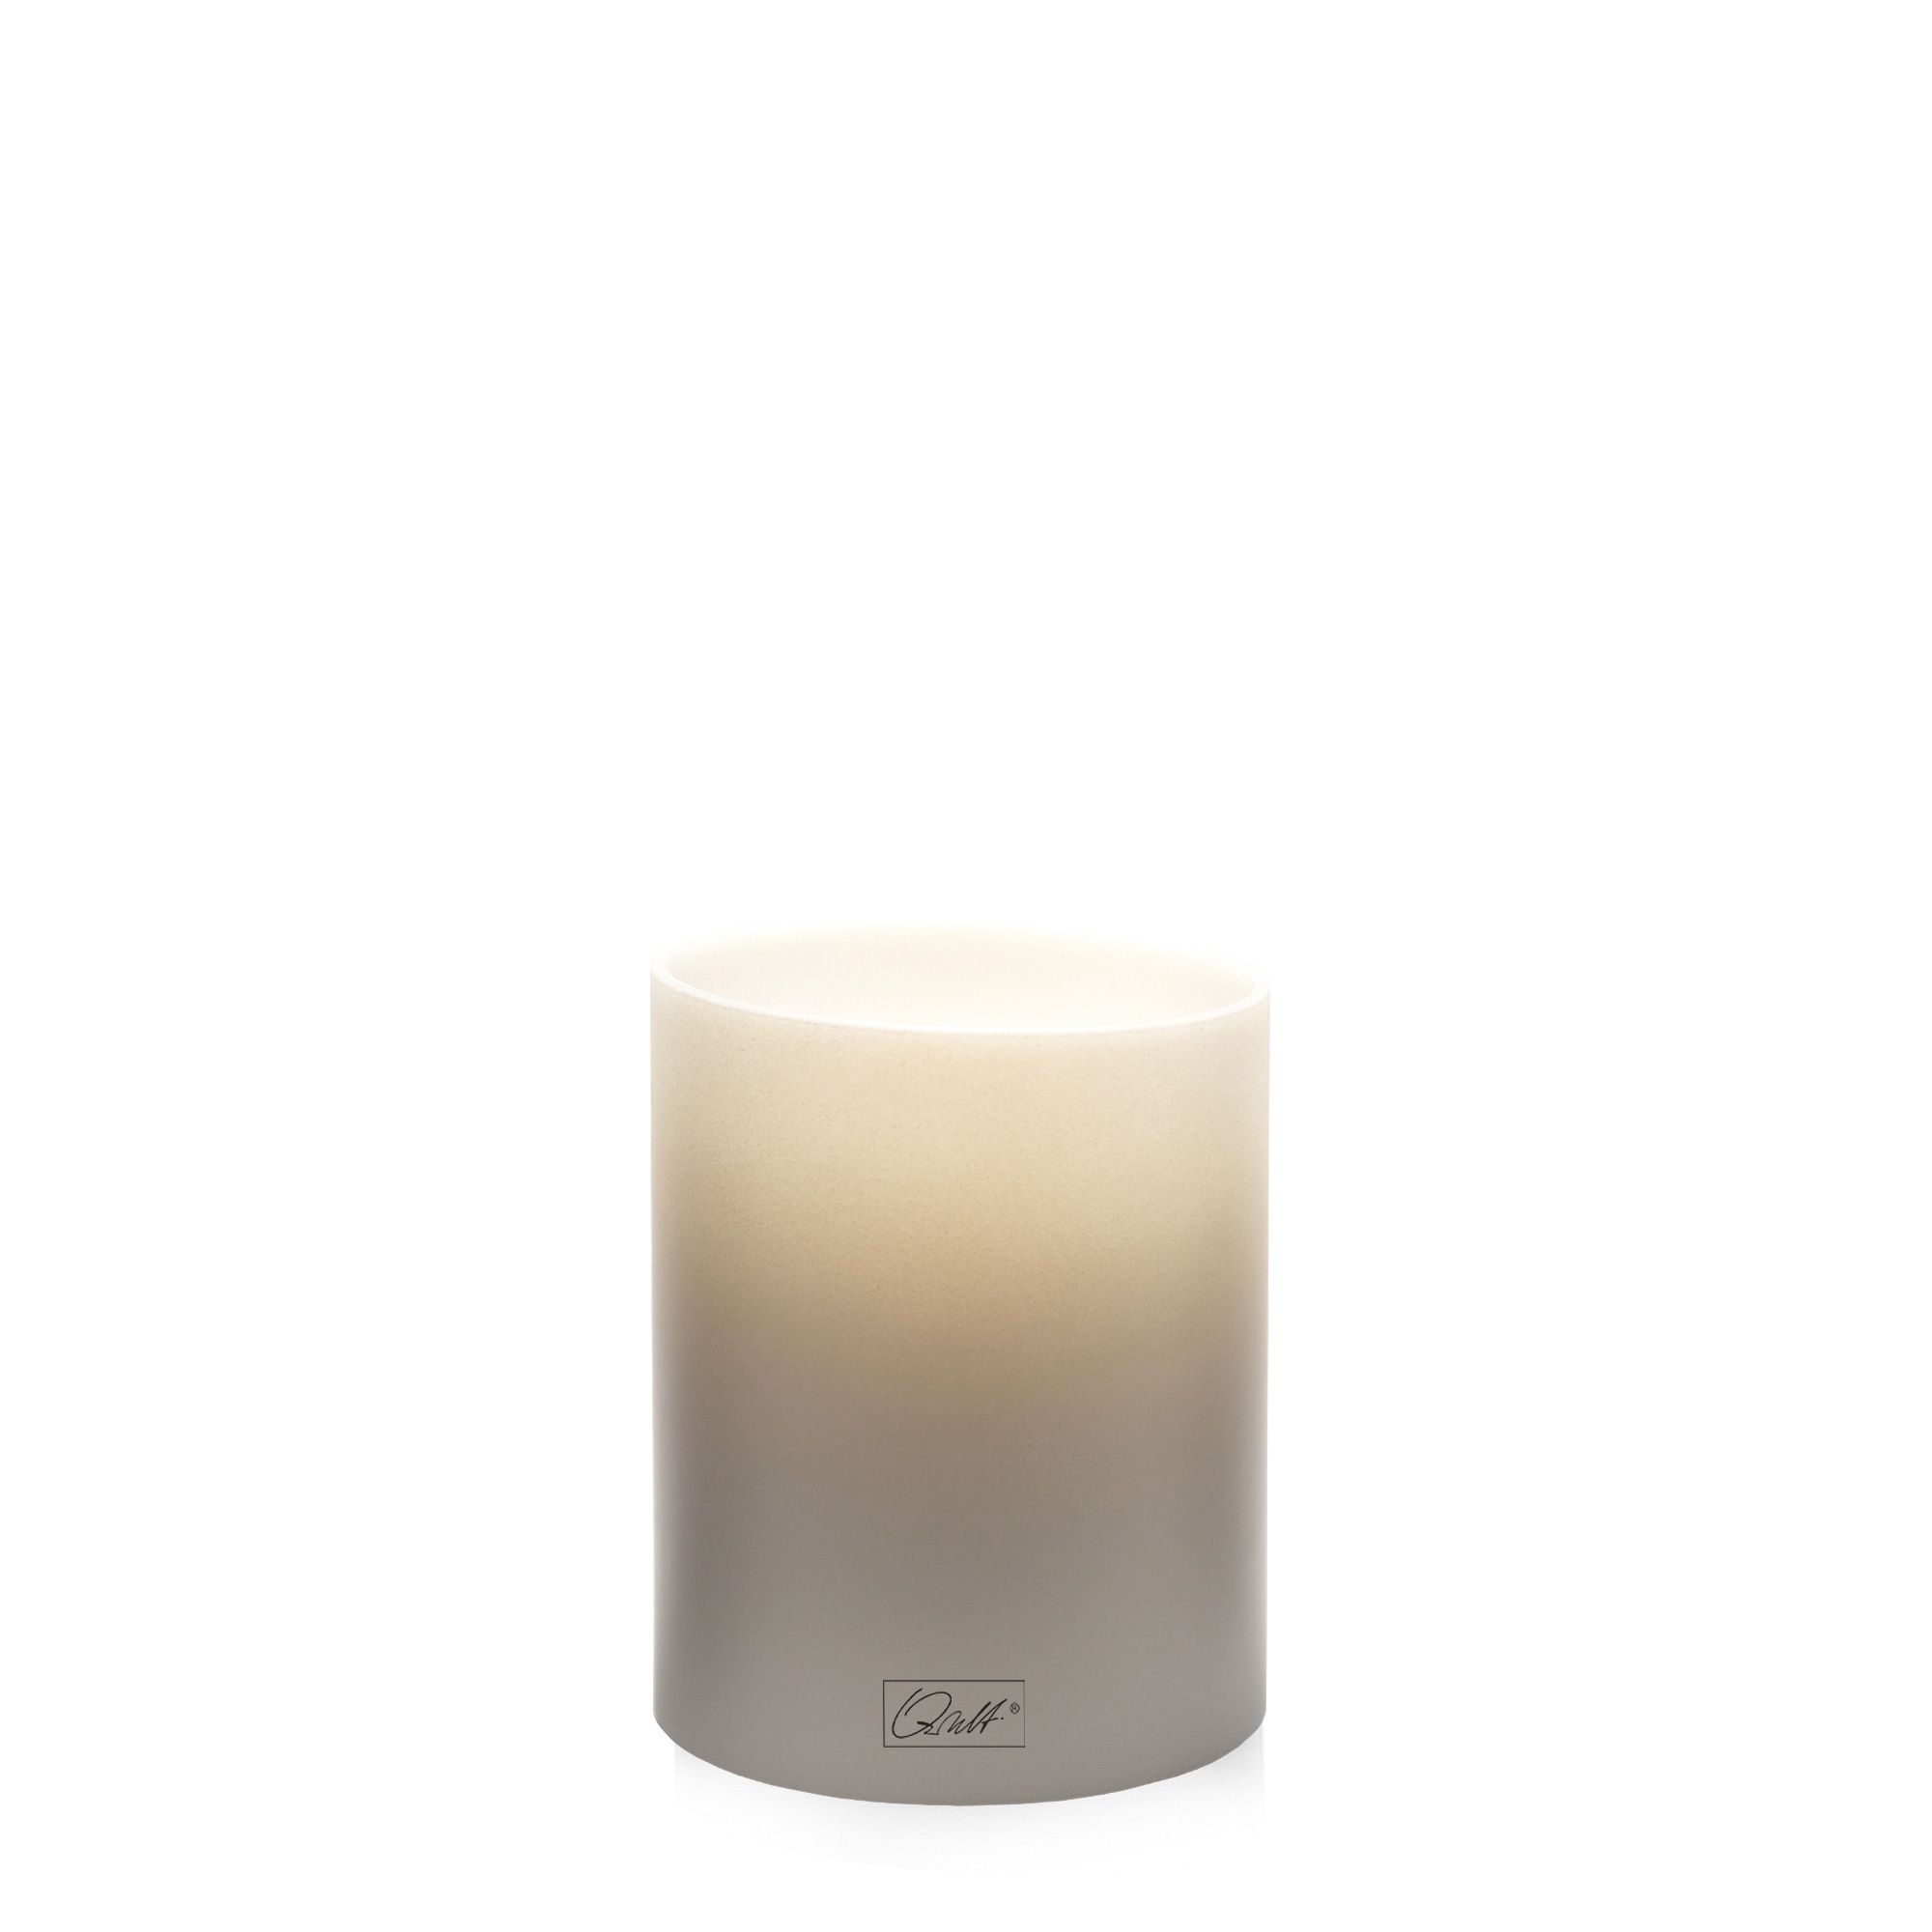 Qult Farluce Inside - Tealight Candle Holder Ø 8 x H 9 cm - Taupe